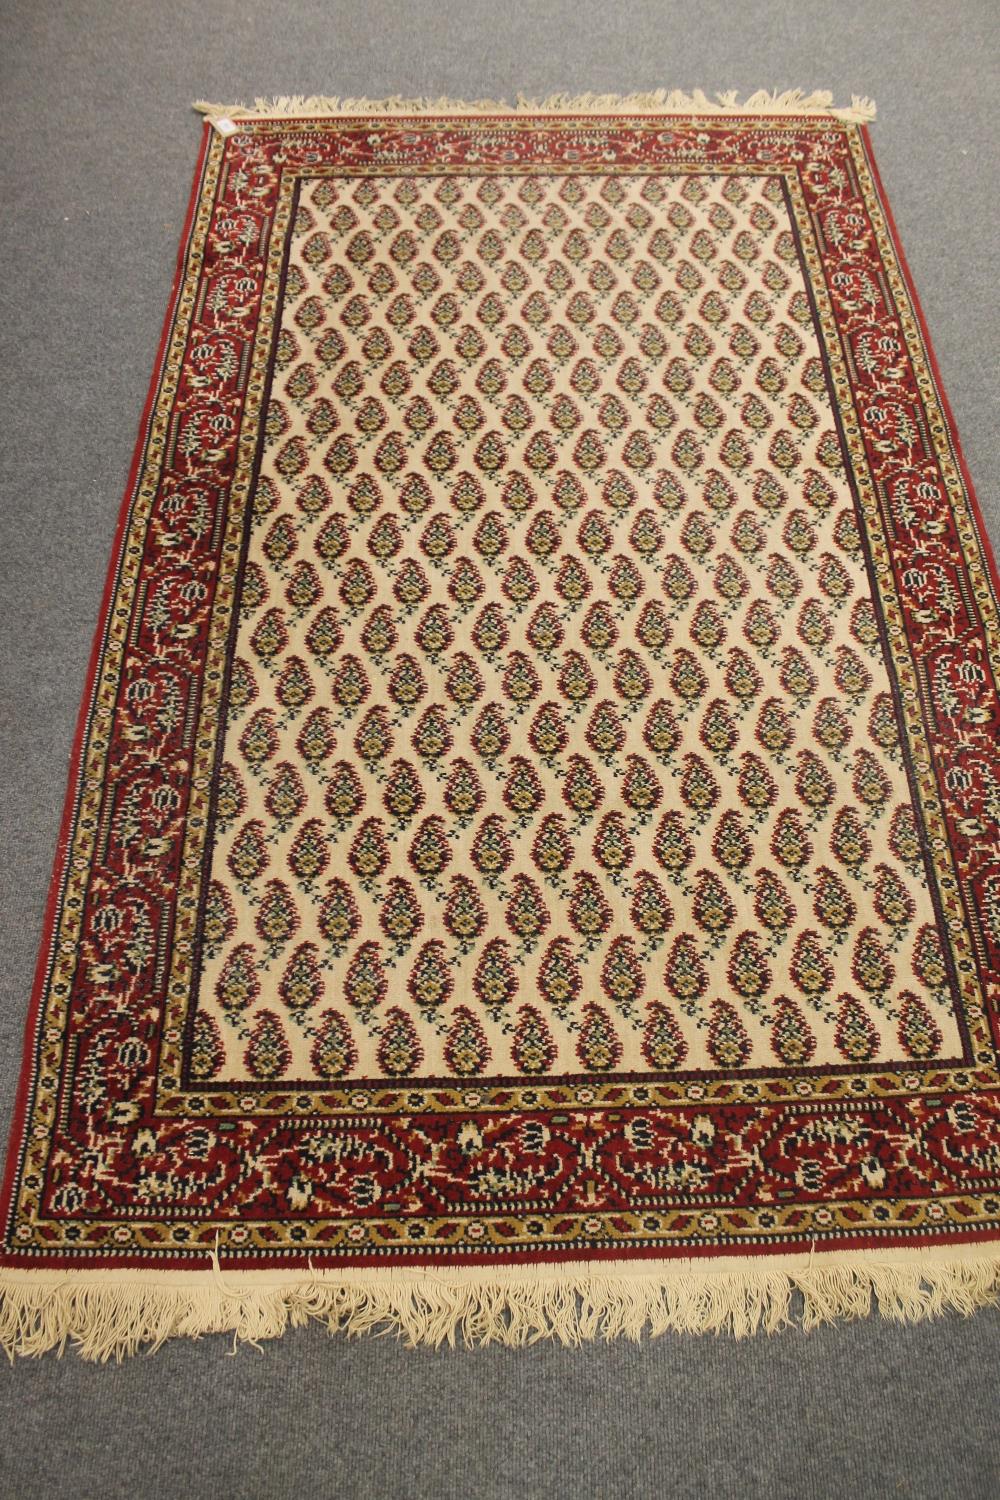 A fringed Eastern rug on cream ground